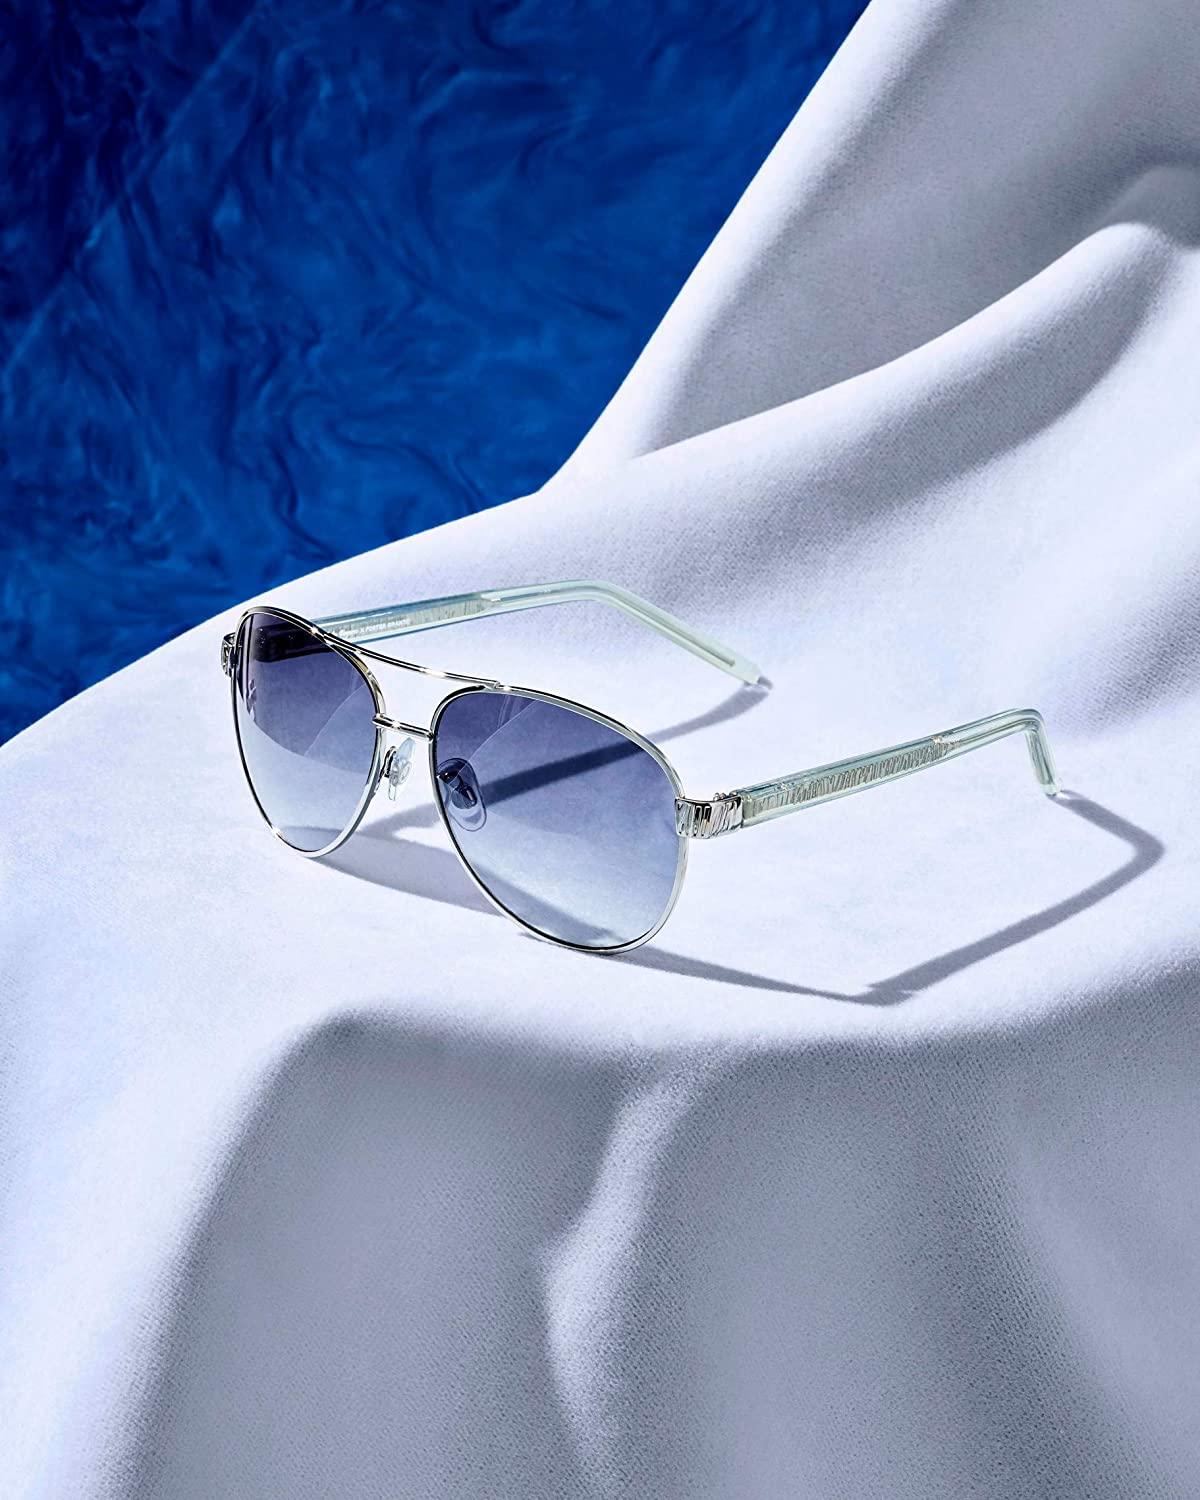 Grant Polarized Aviator Sunglasses for Men and Women